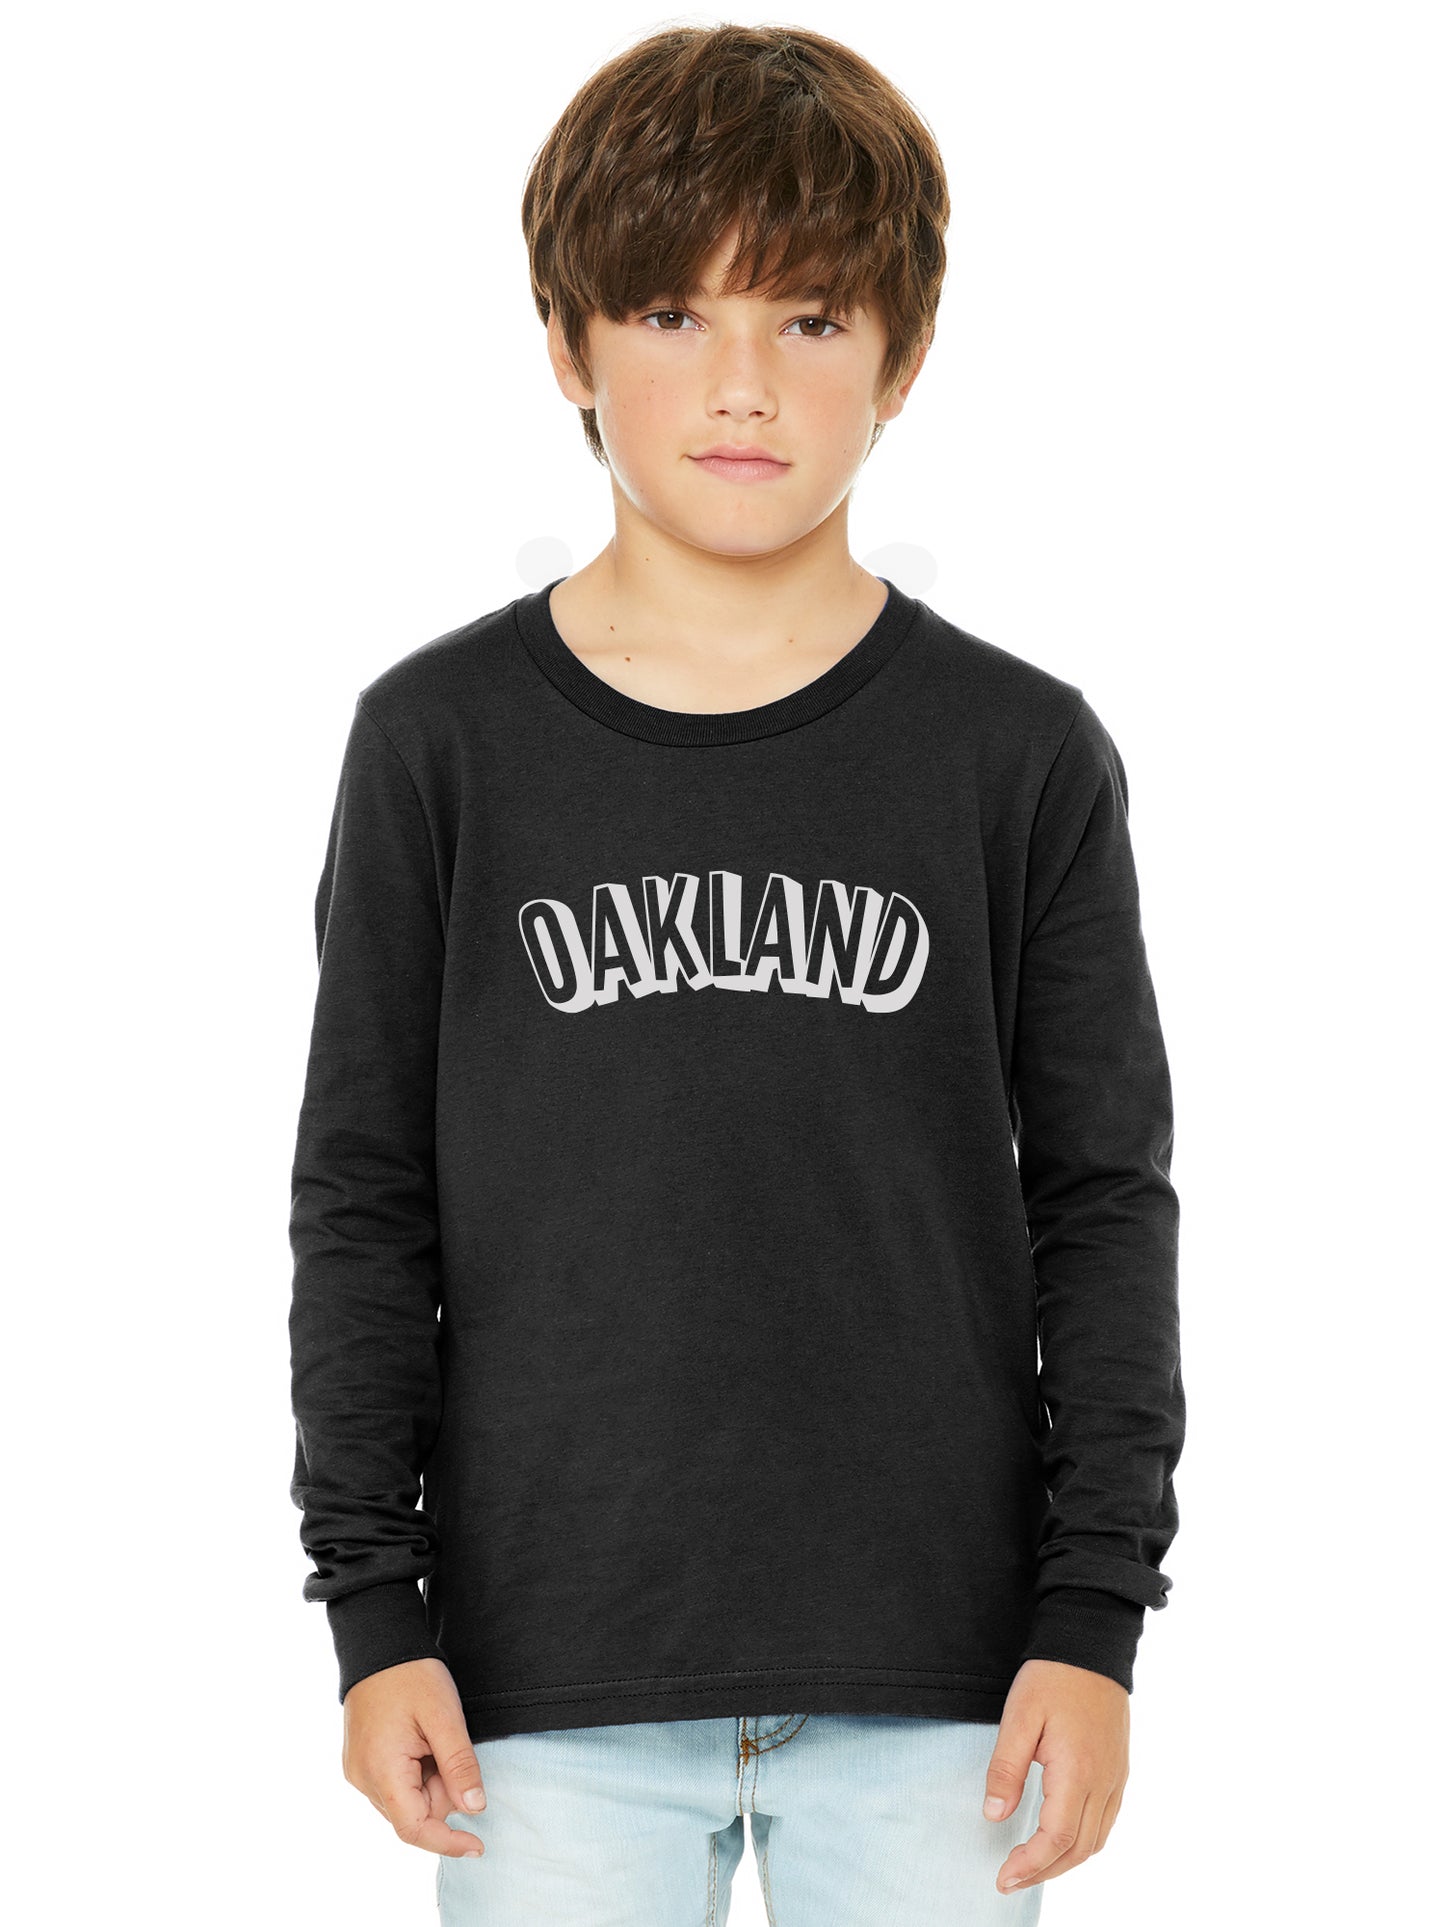 Daxton Youth Long Sleeve Oakland Basic Tshirt